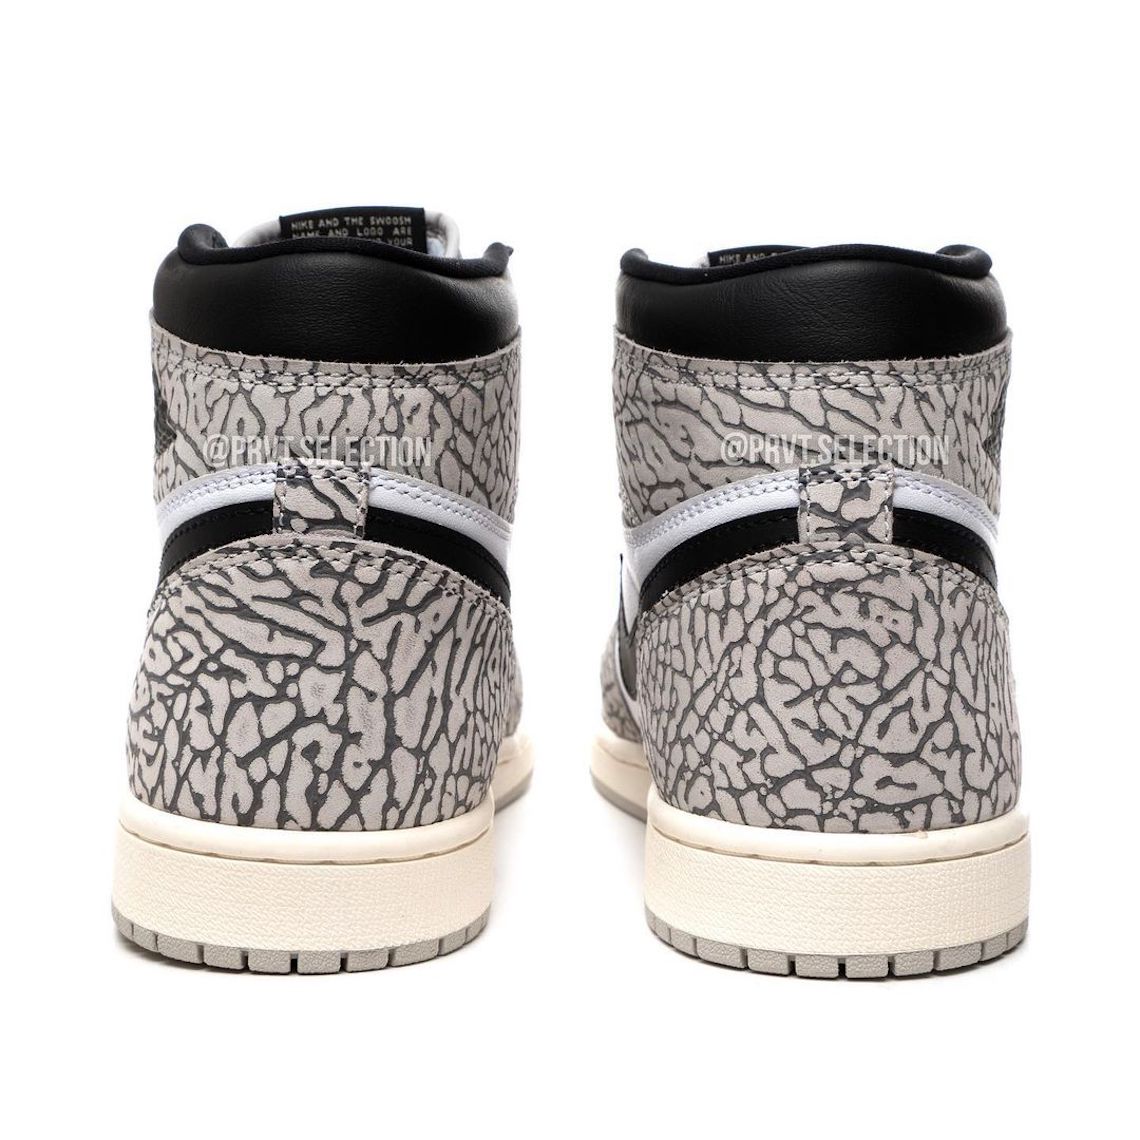 Air Jordan 11 CMFT Low Schuh für ältere Kinder Grau